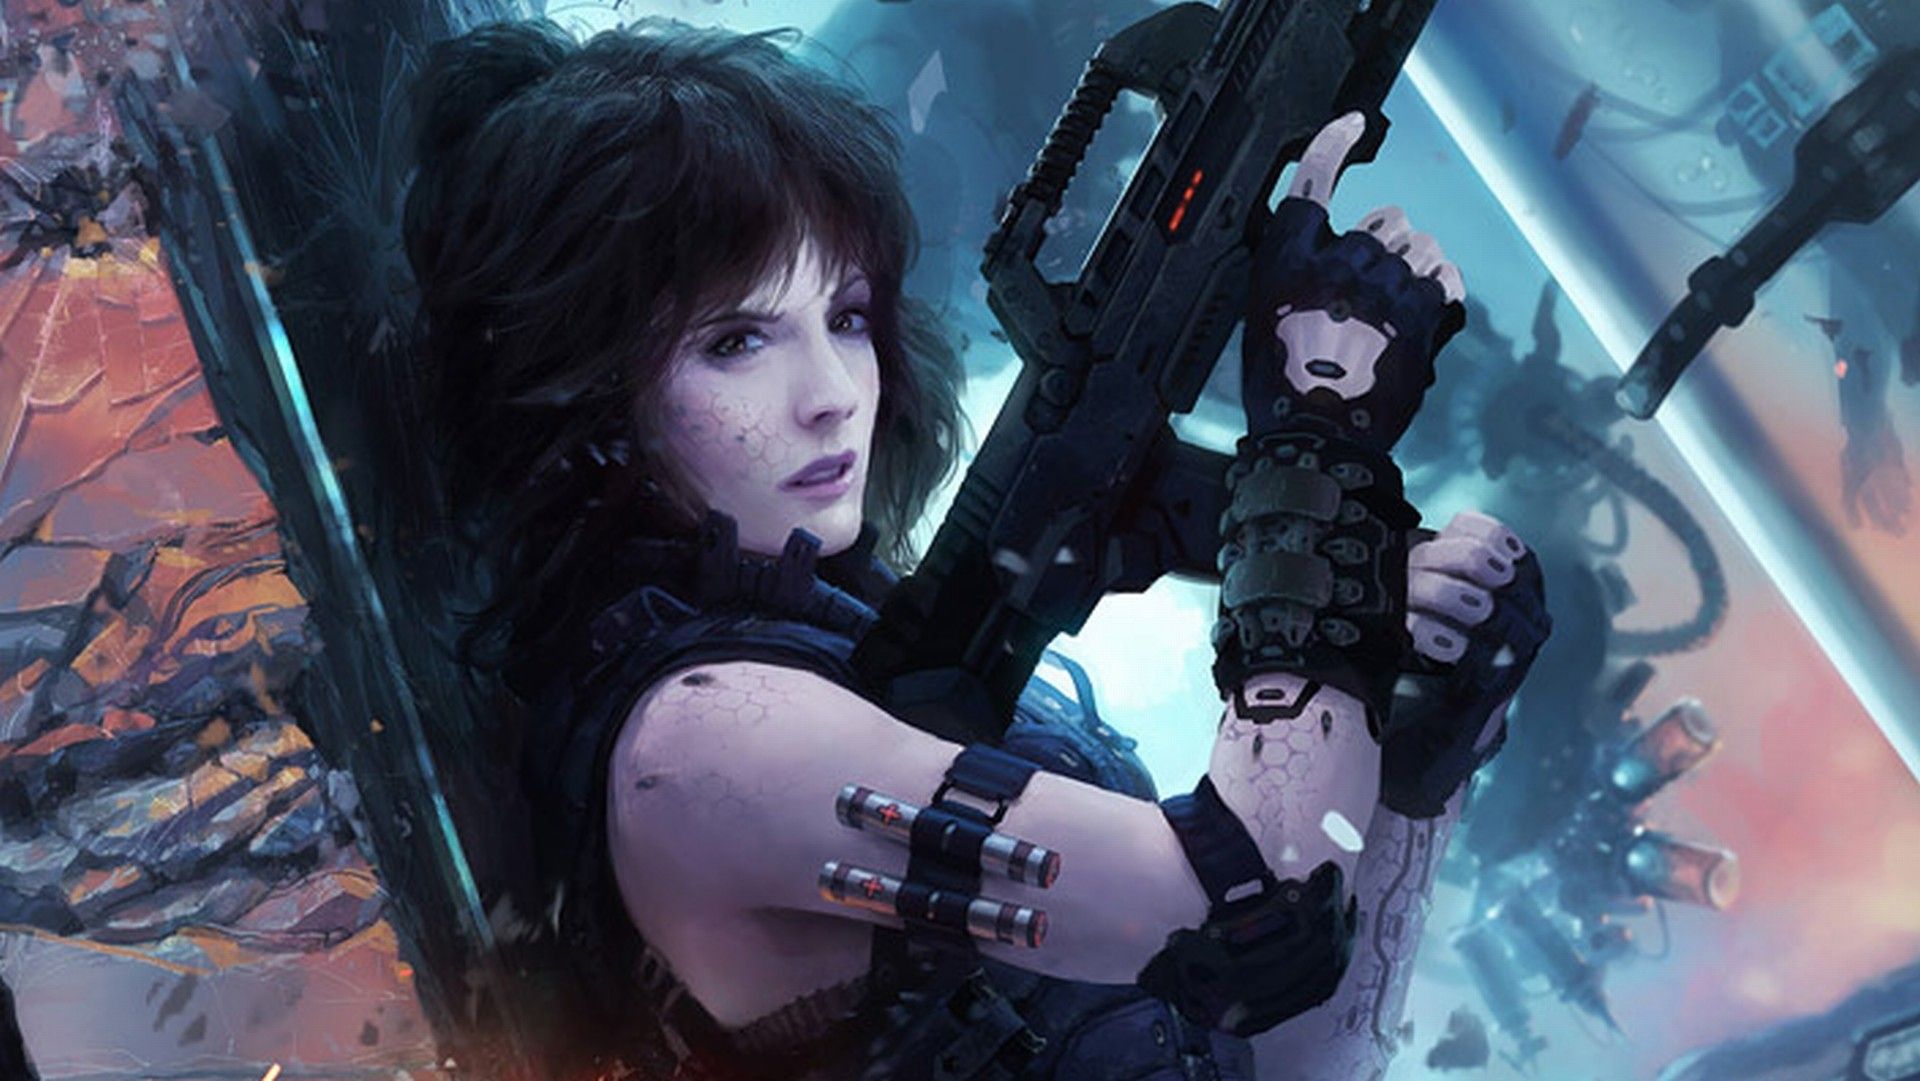 px cyberpunk Futuristic science fiction weapon women